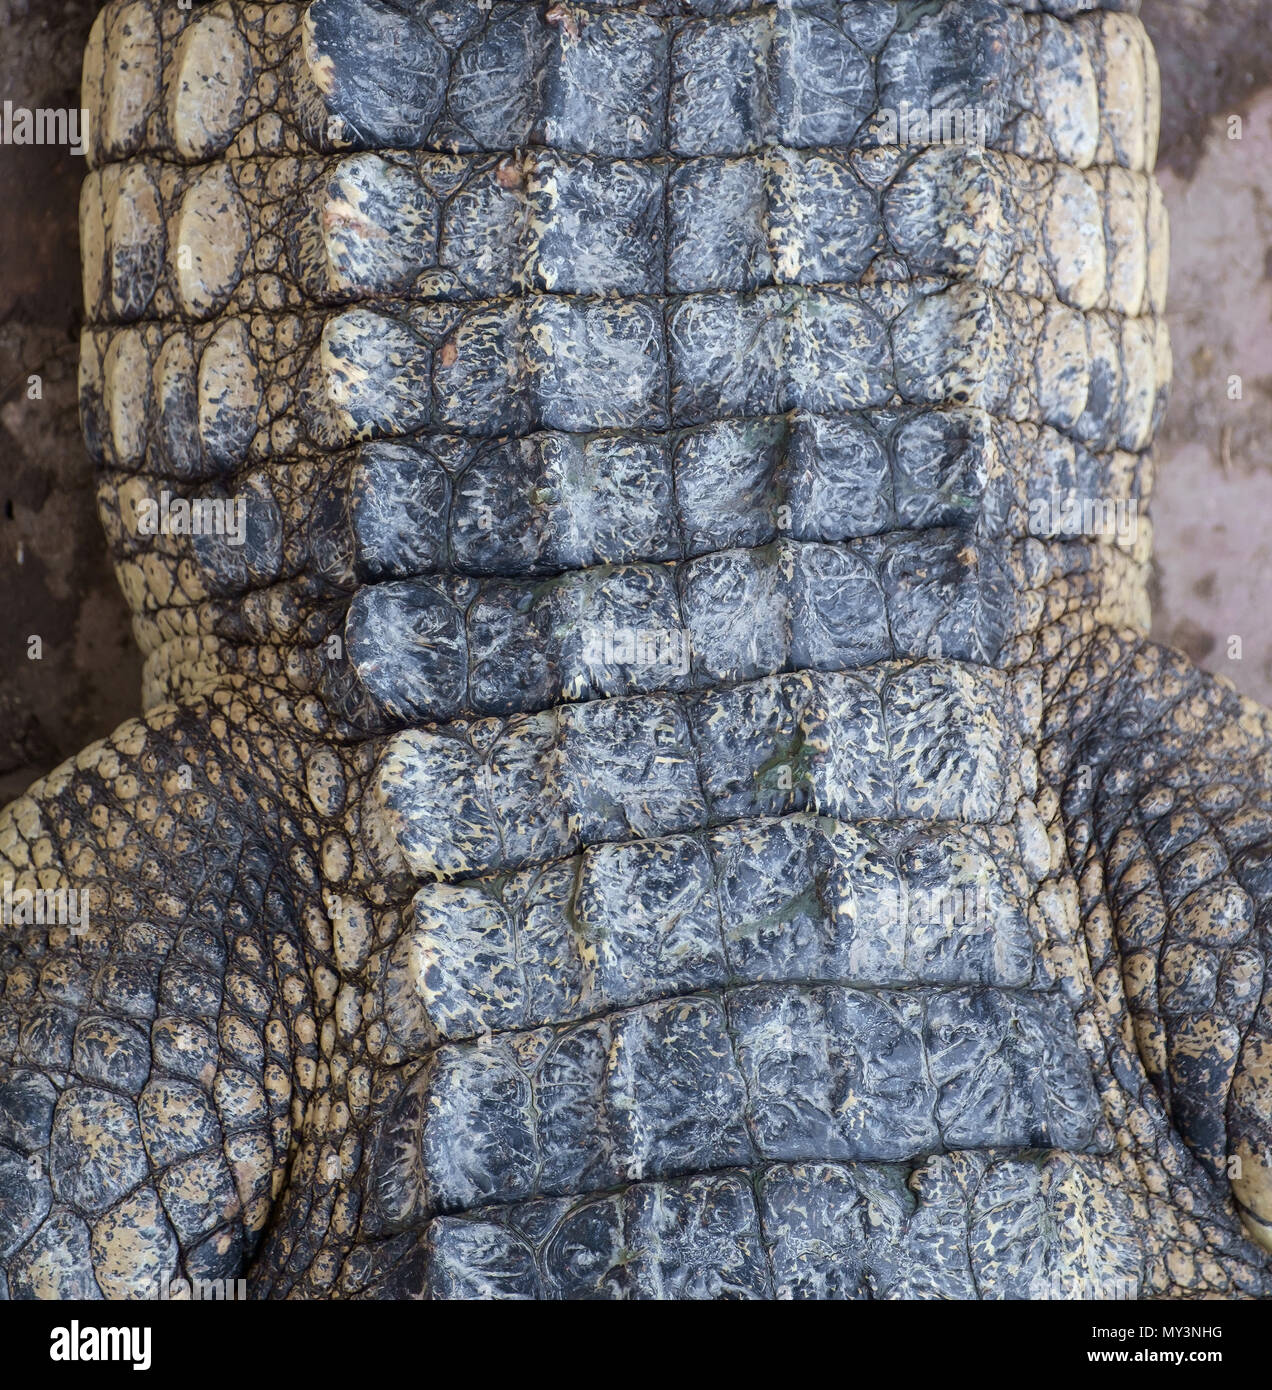 Pink Leather Crocodile Skin Stock Image - Image of skin, leather: 162428363